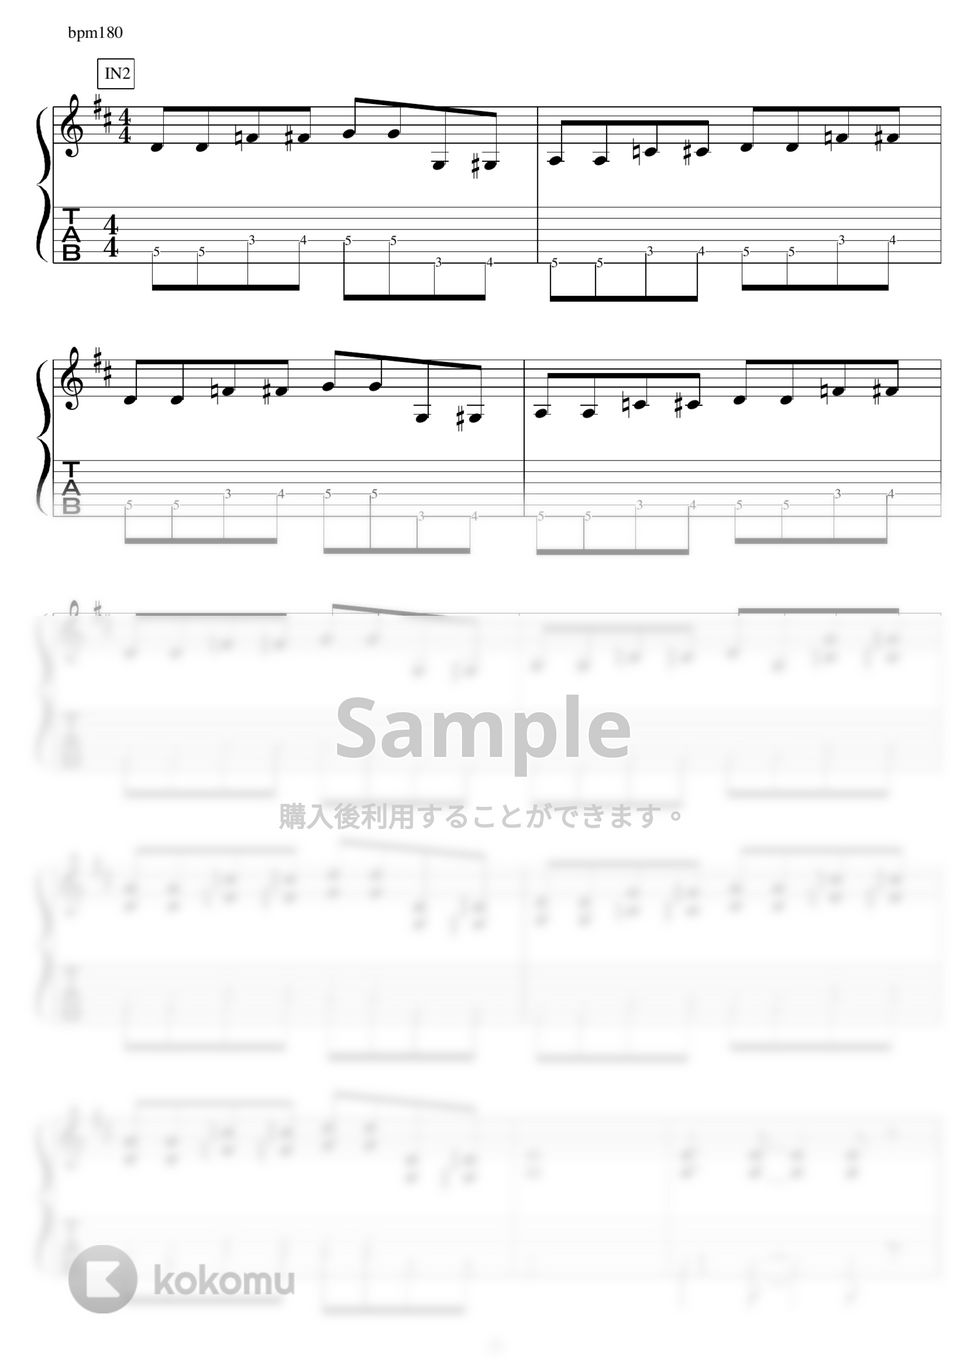 Hi-STANDARD - MAXIMUM OVER DRIVE ギター演奏動画付TAB譜 by バイトーン音楽教室